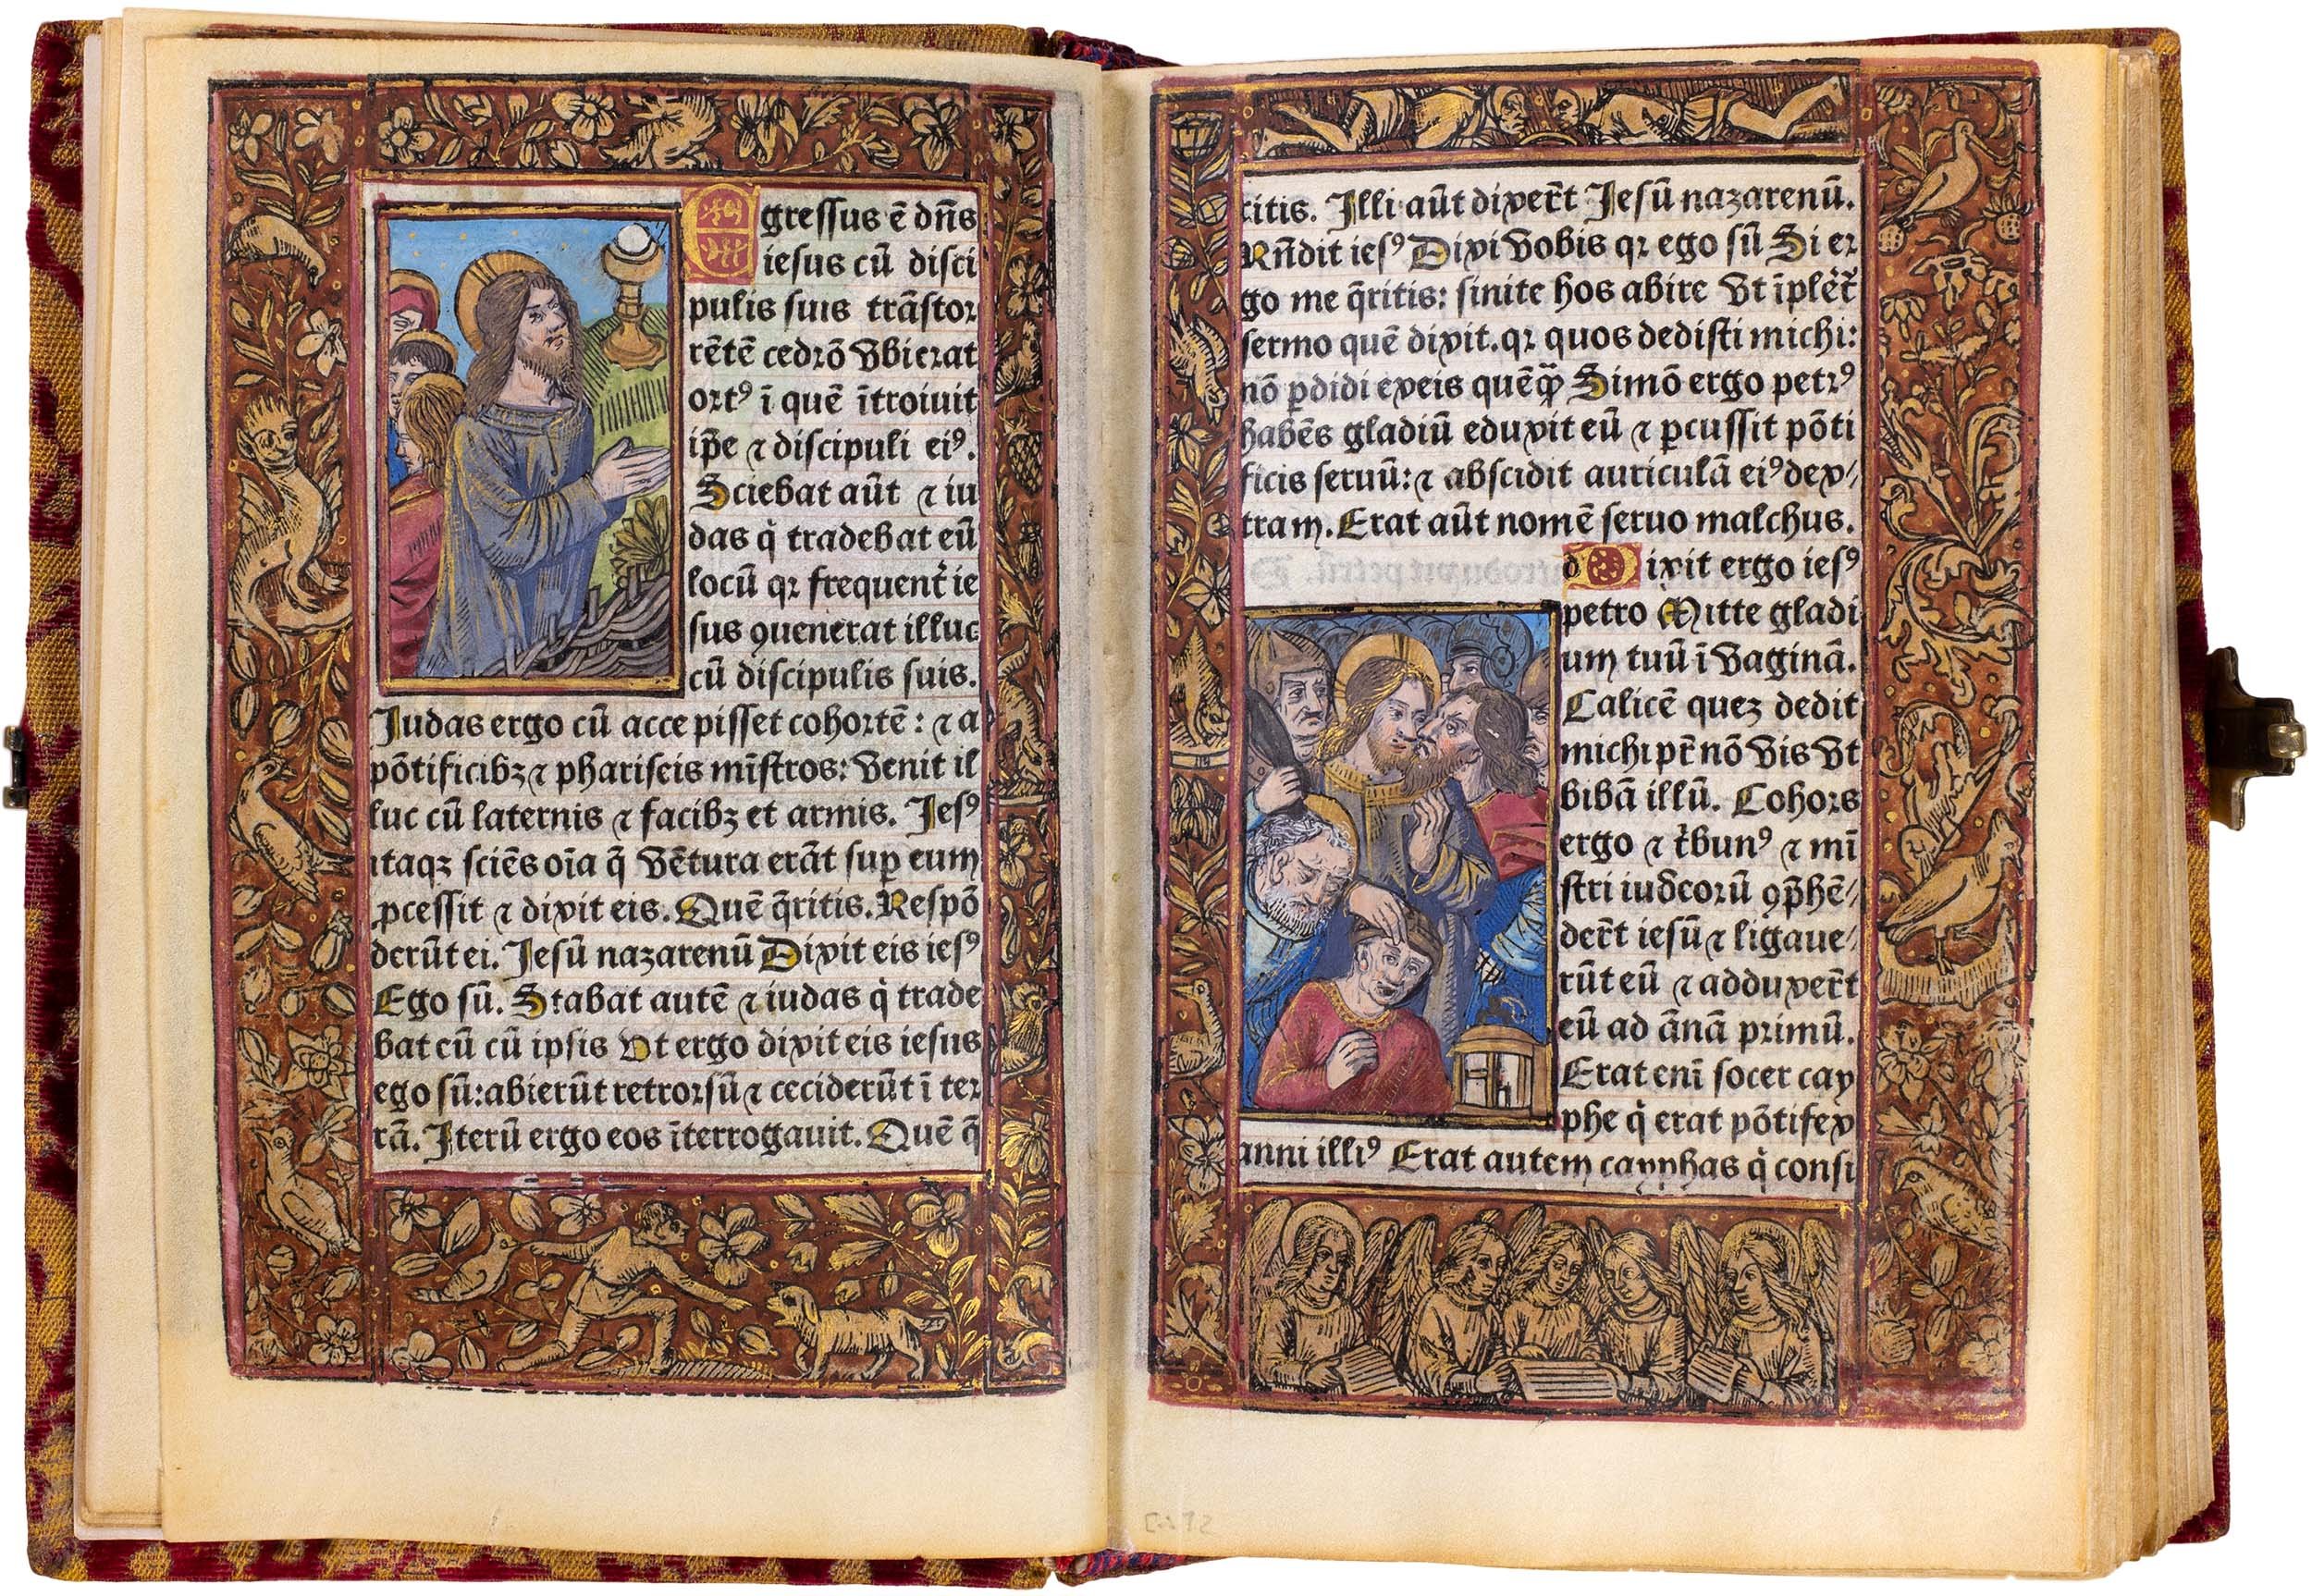 Horae-bmv-1488-gamma-dupre-printed-book-of-hours-danse-macabre-camaieu-dor-illuminated-vellum-copy-12.jpg